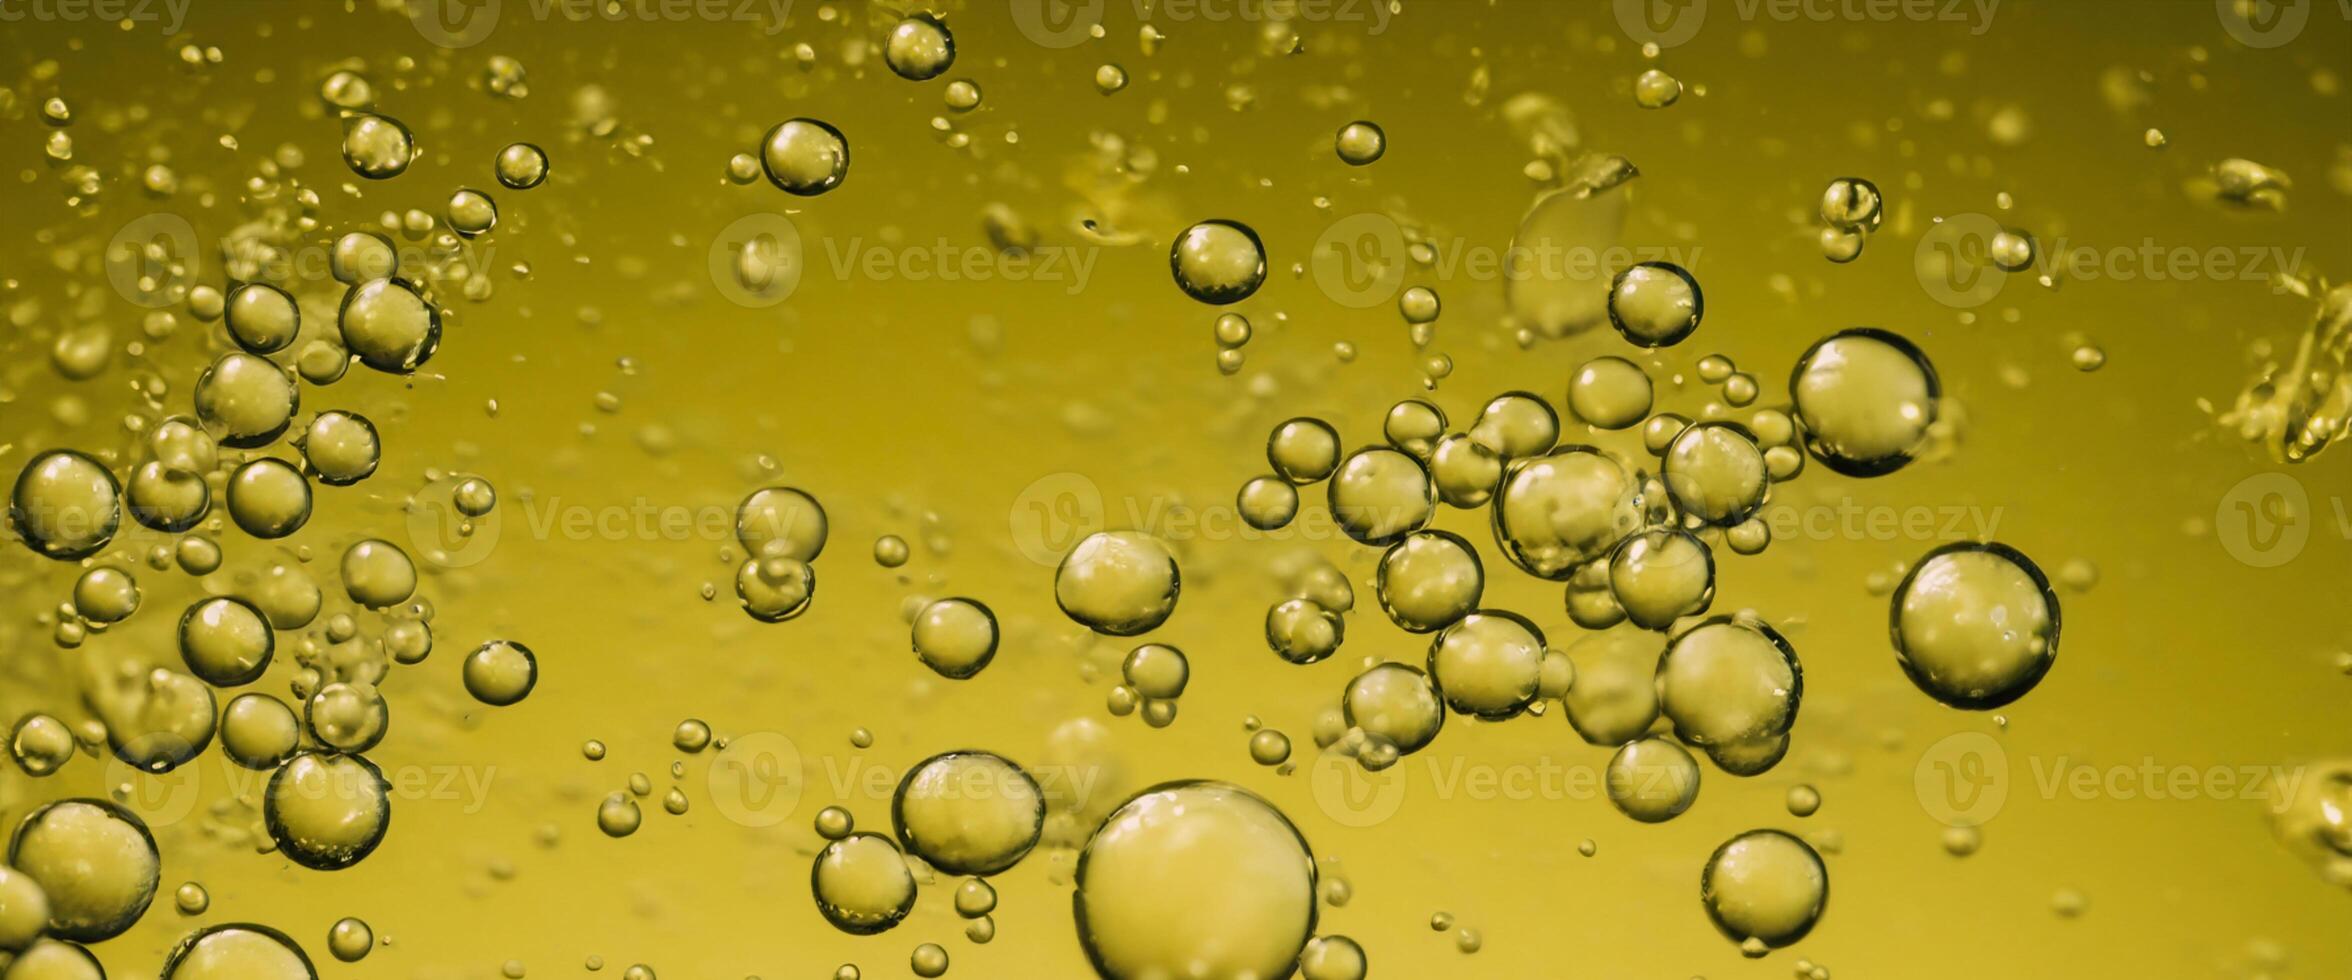 gyllene hyaluron olja bubblor kollagen serum eller gul olja bubblor släppa textur bakgrund foto